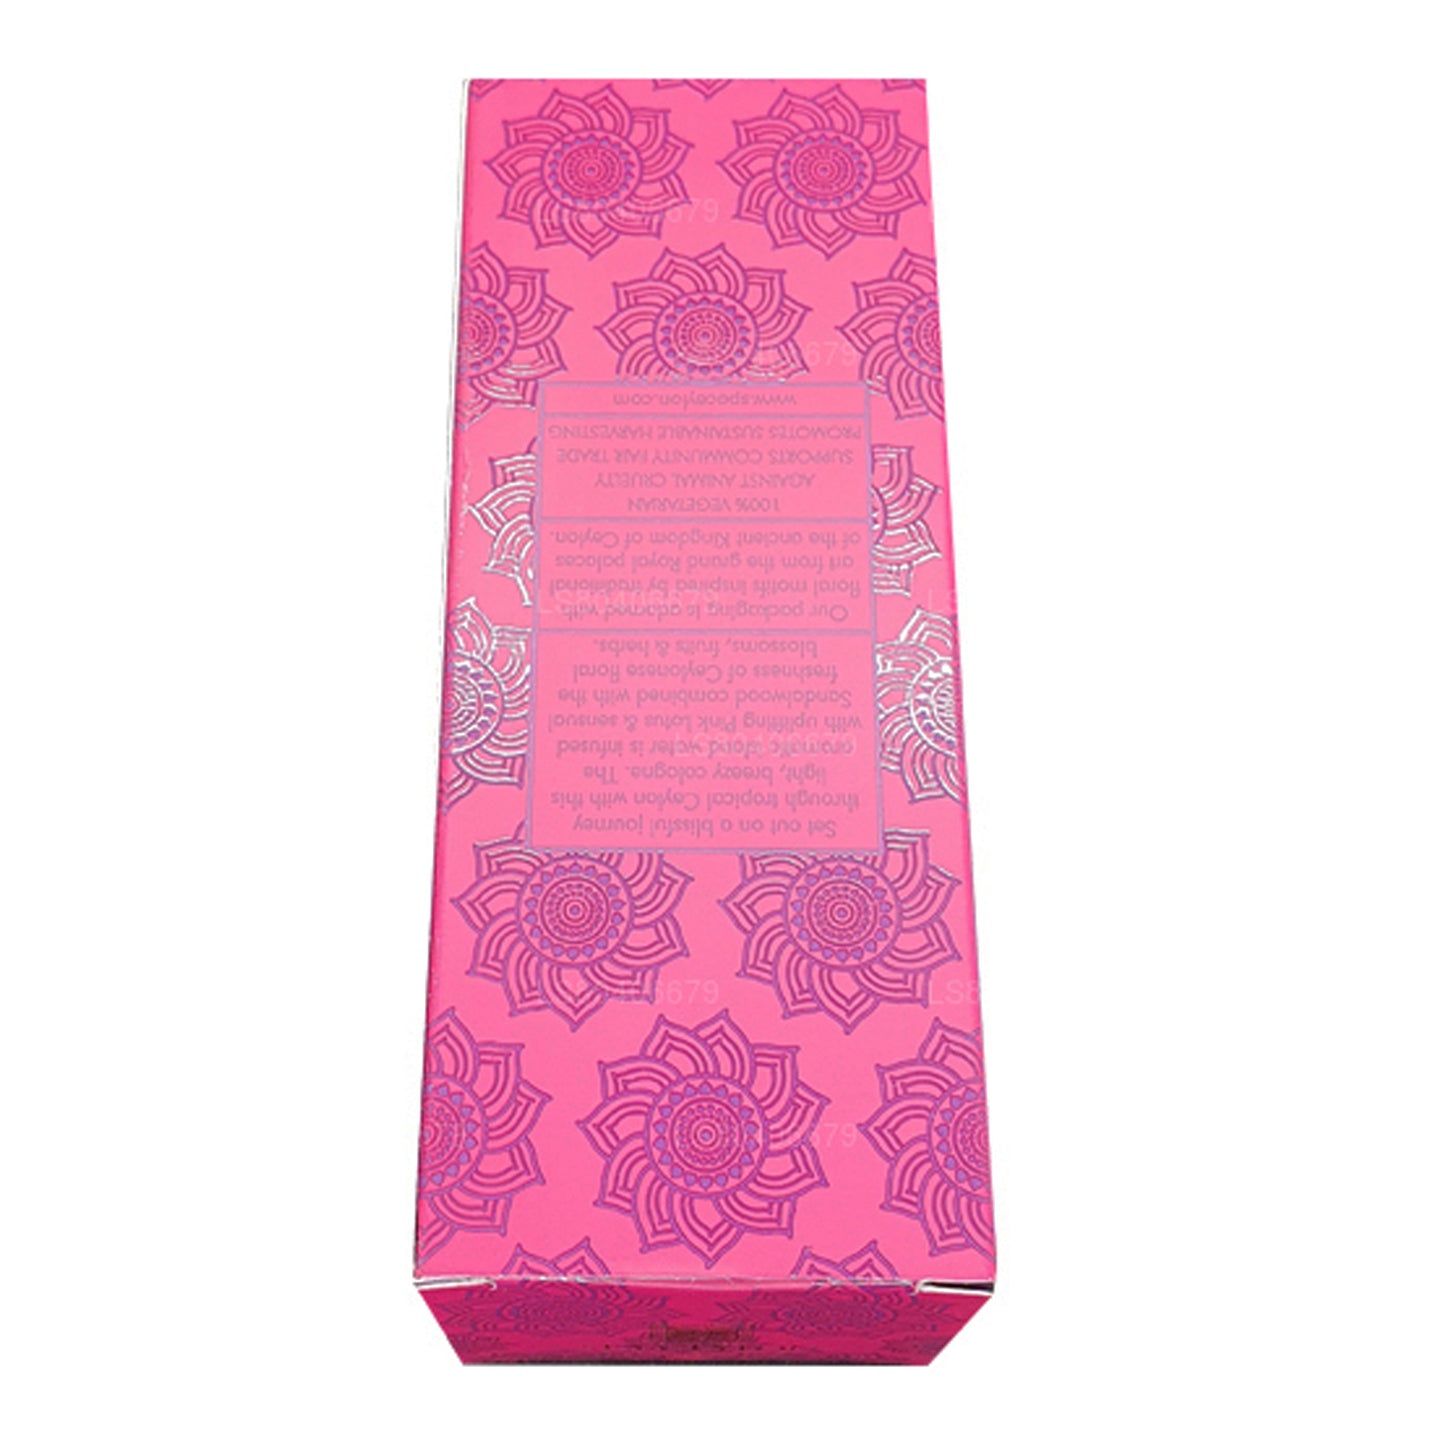 Spa Ceylon Pink Lotus Sandelhout Eau de Ceylon (100 ml)